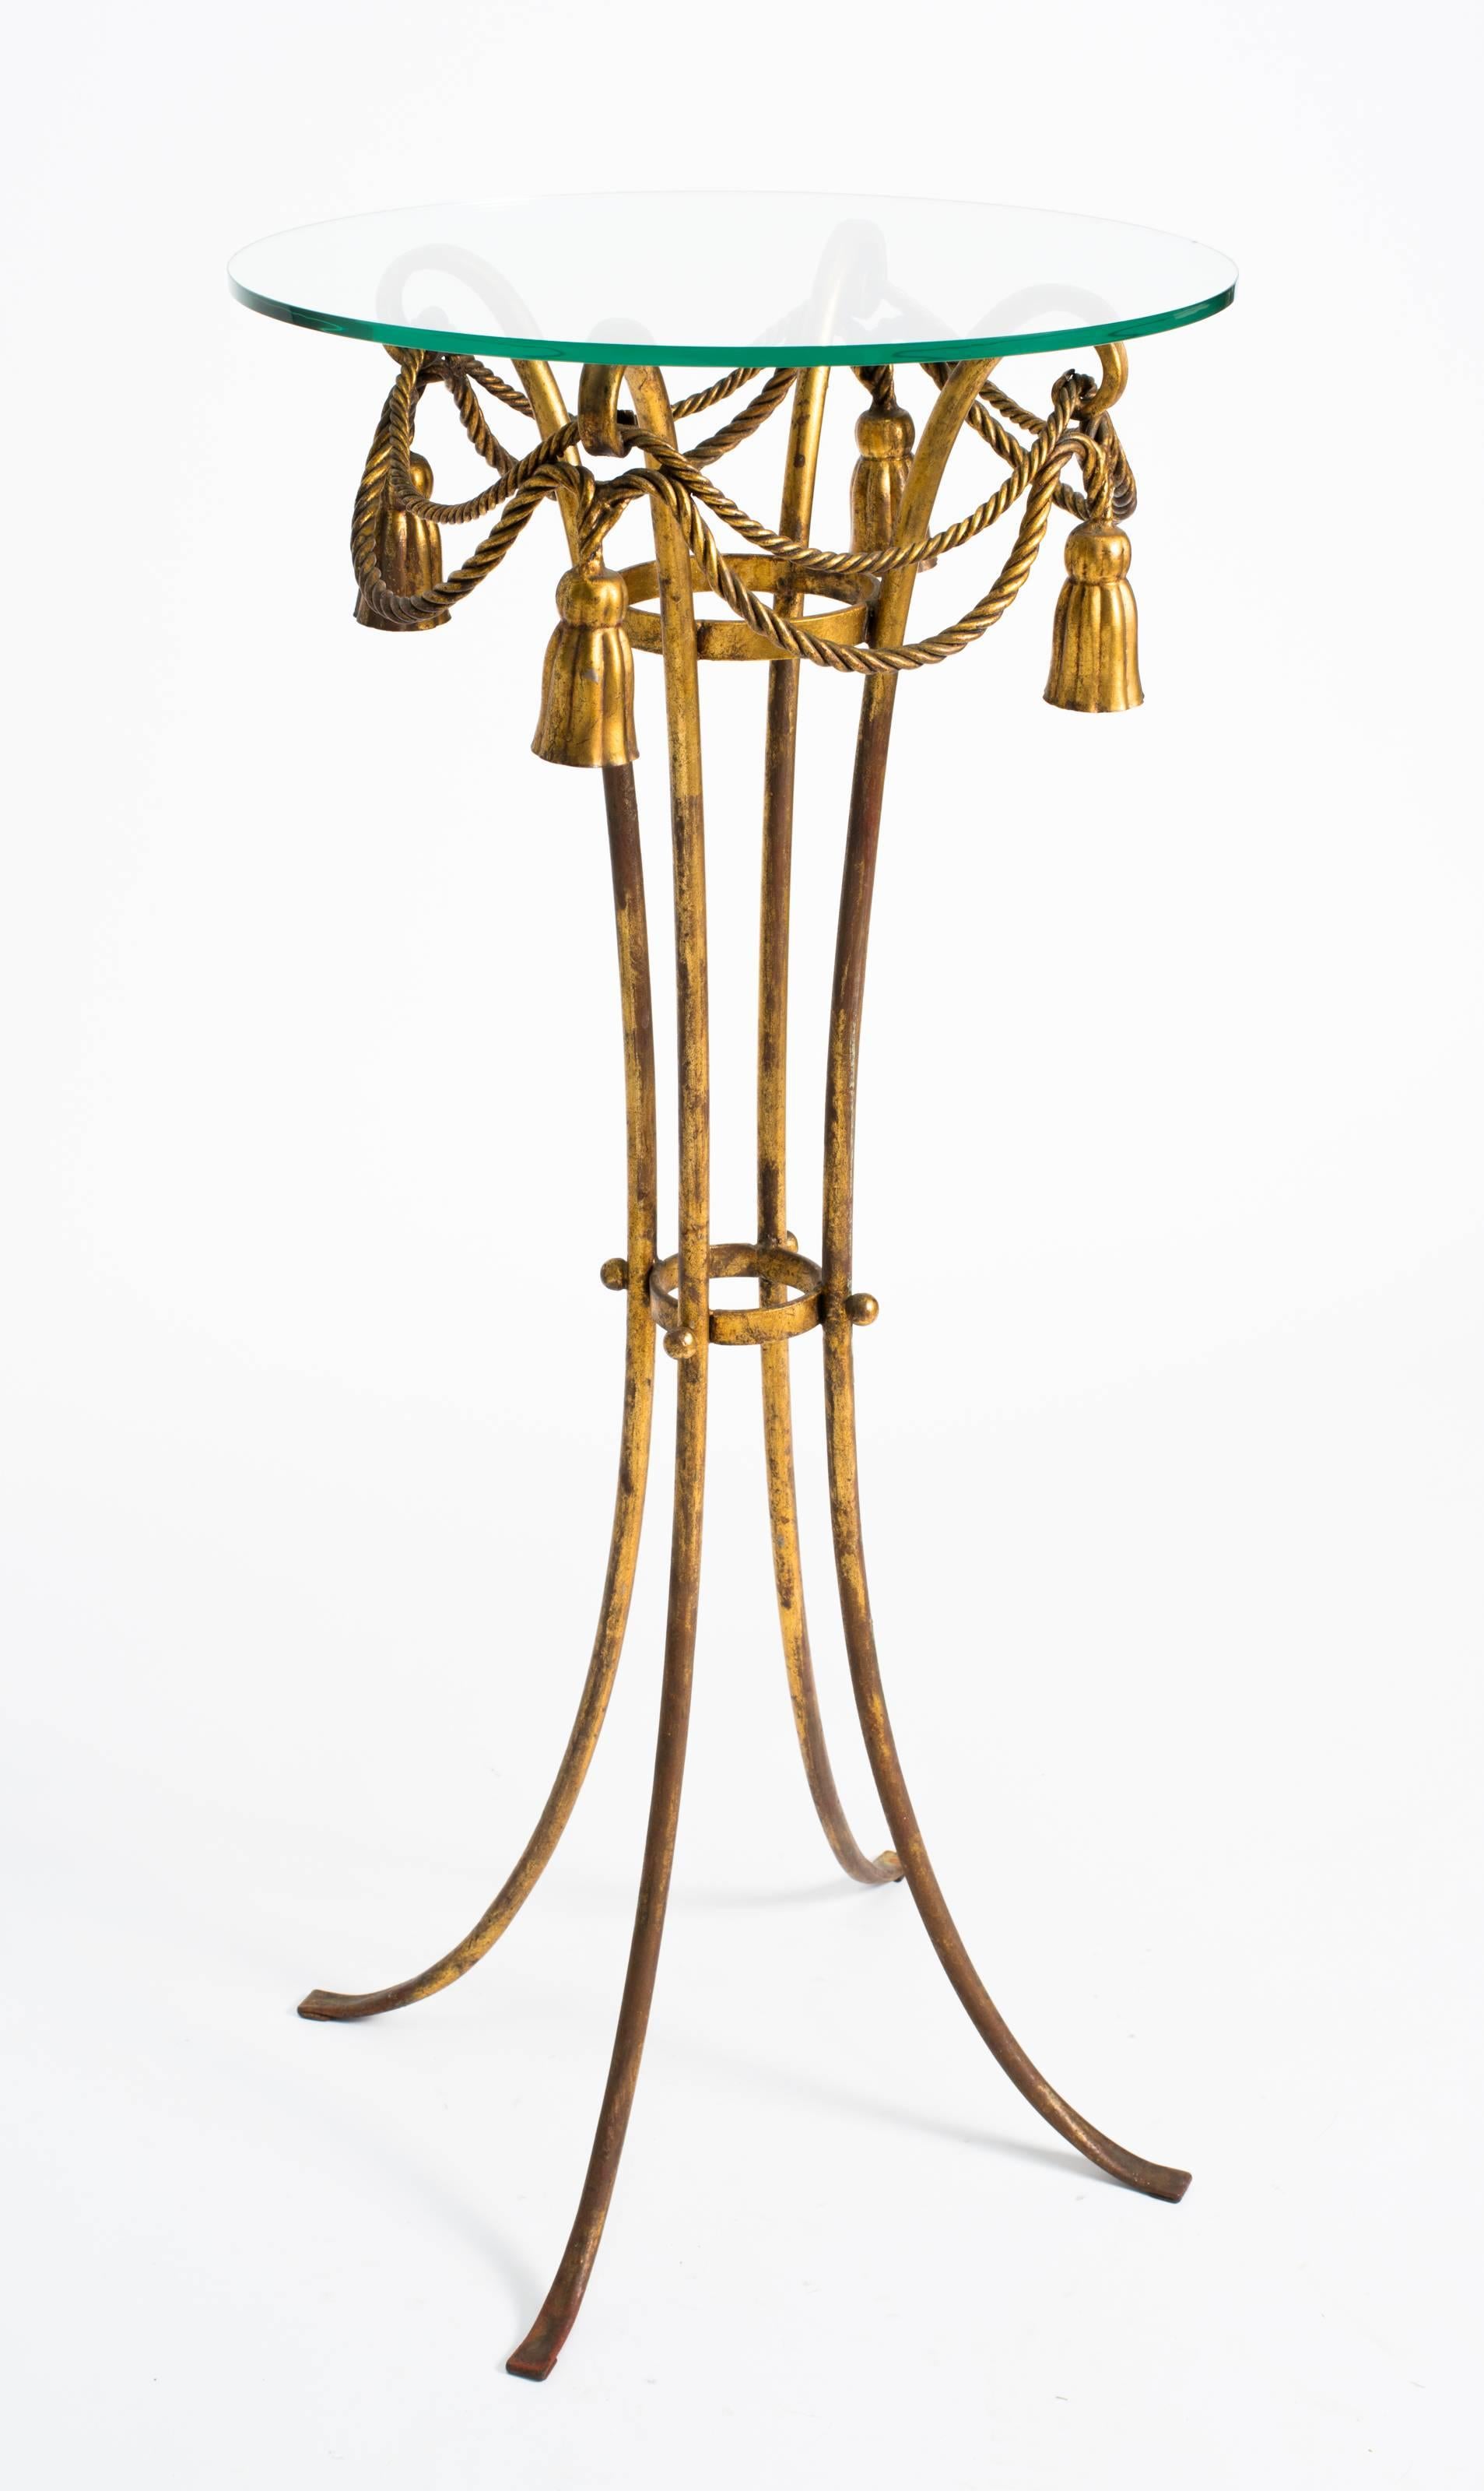 Italian gilt metal tassel pedestal or fern stand with glass top.